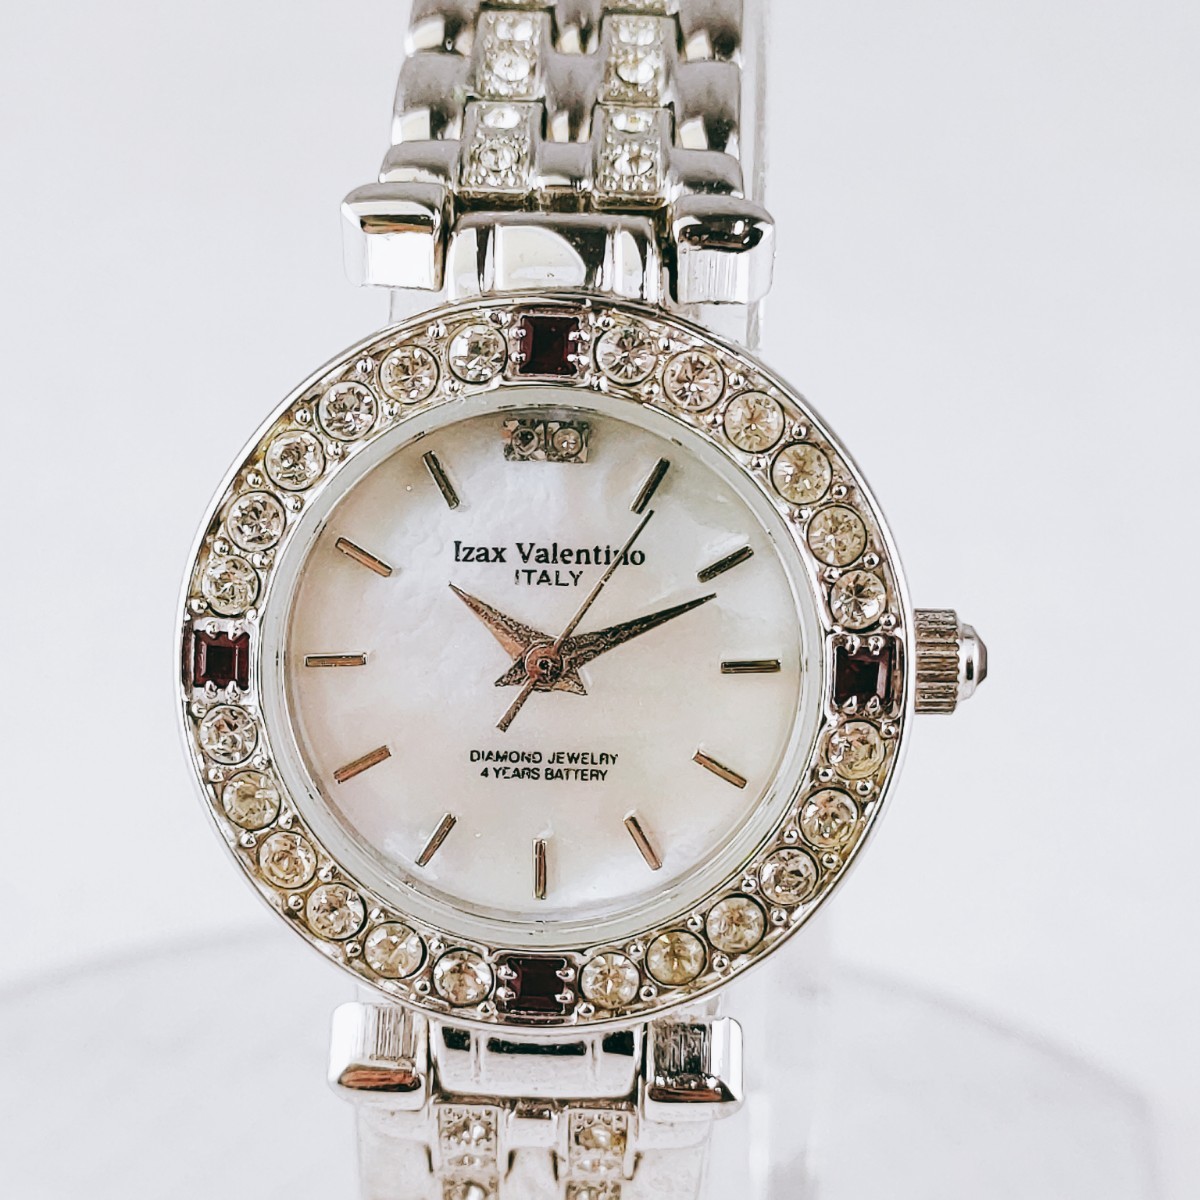 izax valentino アイザックバレンティノ 腕時計 アナログ Diamond jewelry 3針 シェル文字盤 シルバー基調 アクセサリー ヴィンテージ